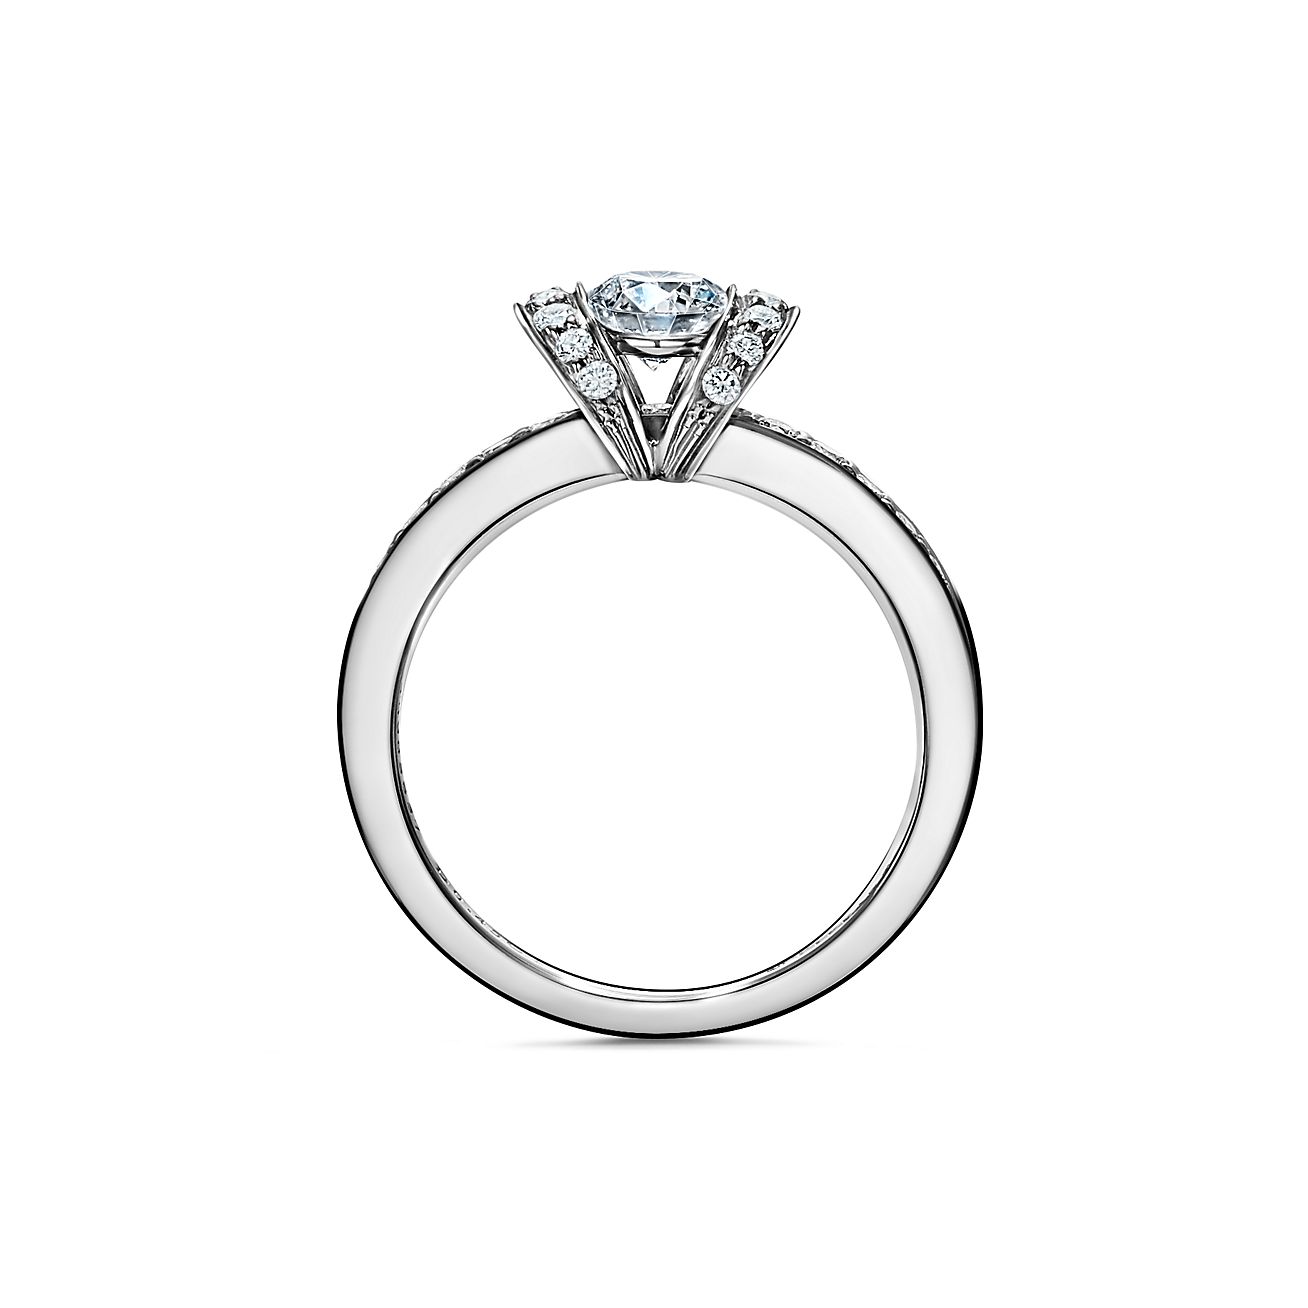 Tiffany Ribbon engagement ring in 